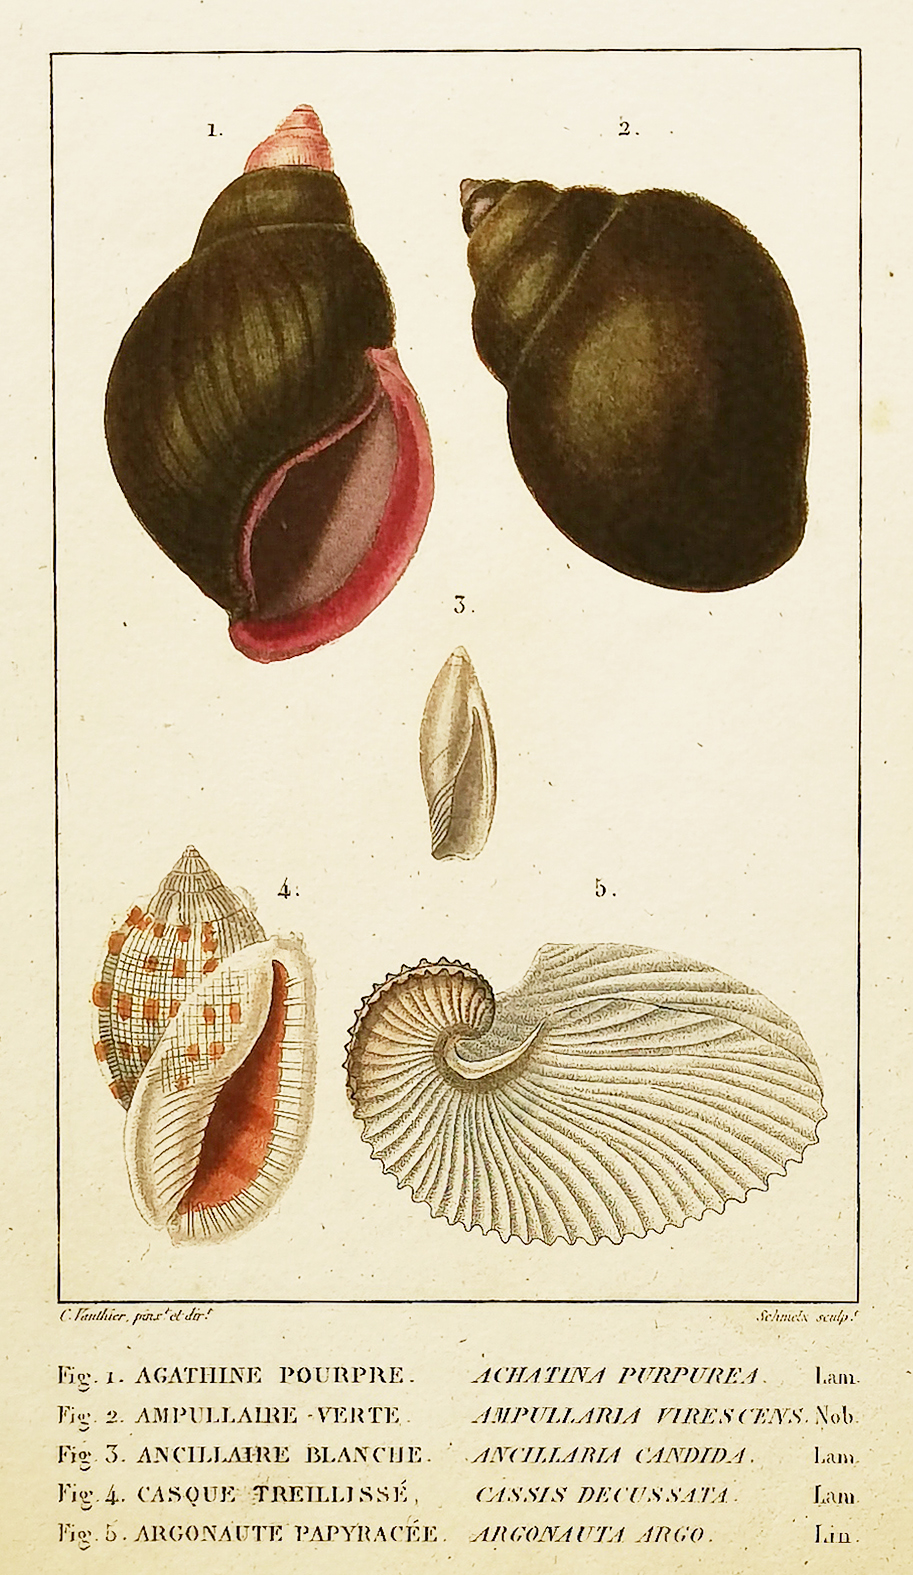 Fig 1. Agathine Pourpre Fig 2. Ampullaire Verte Fig 3. Ancillaire Blanche Fig 4. Casque Treillisse Fig 5. Argonaute Papyracee - Antique Print from 1824